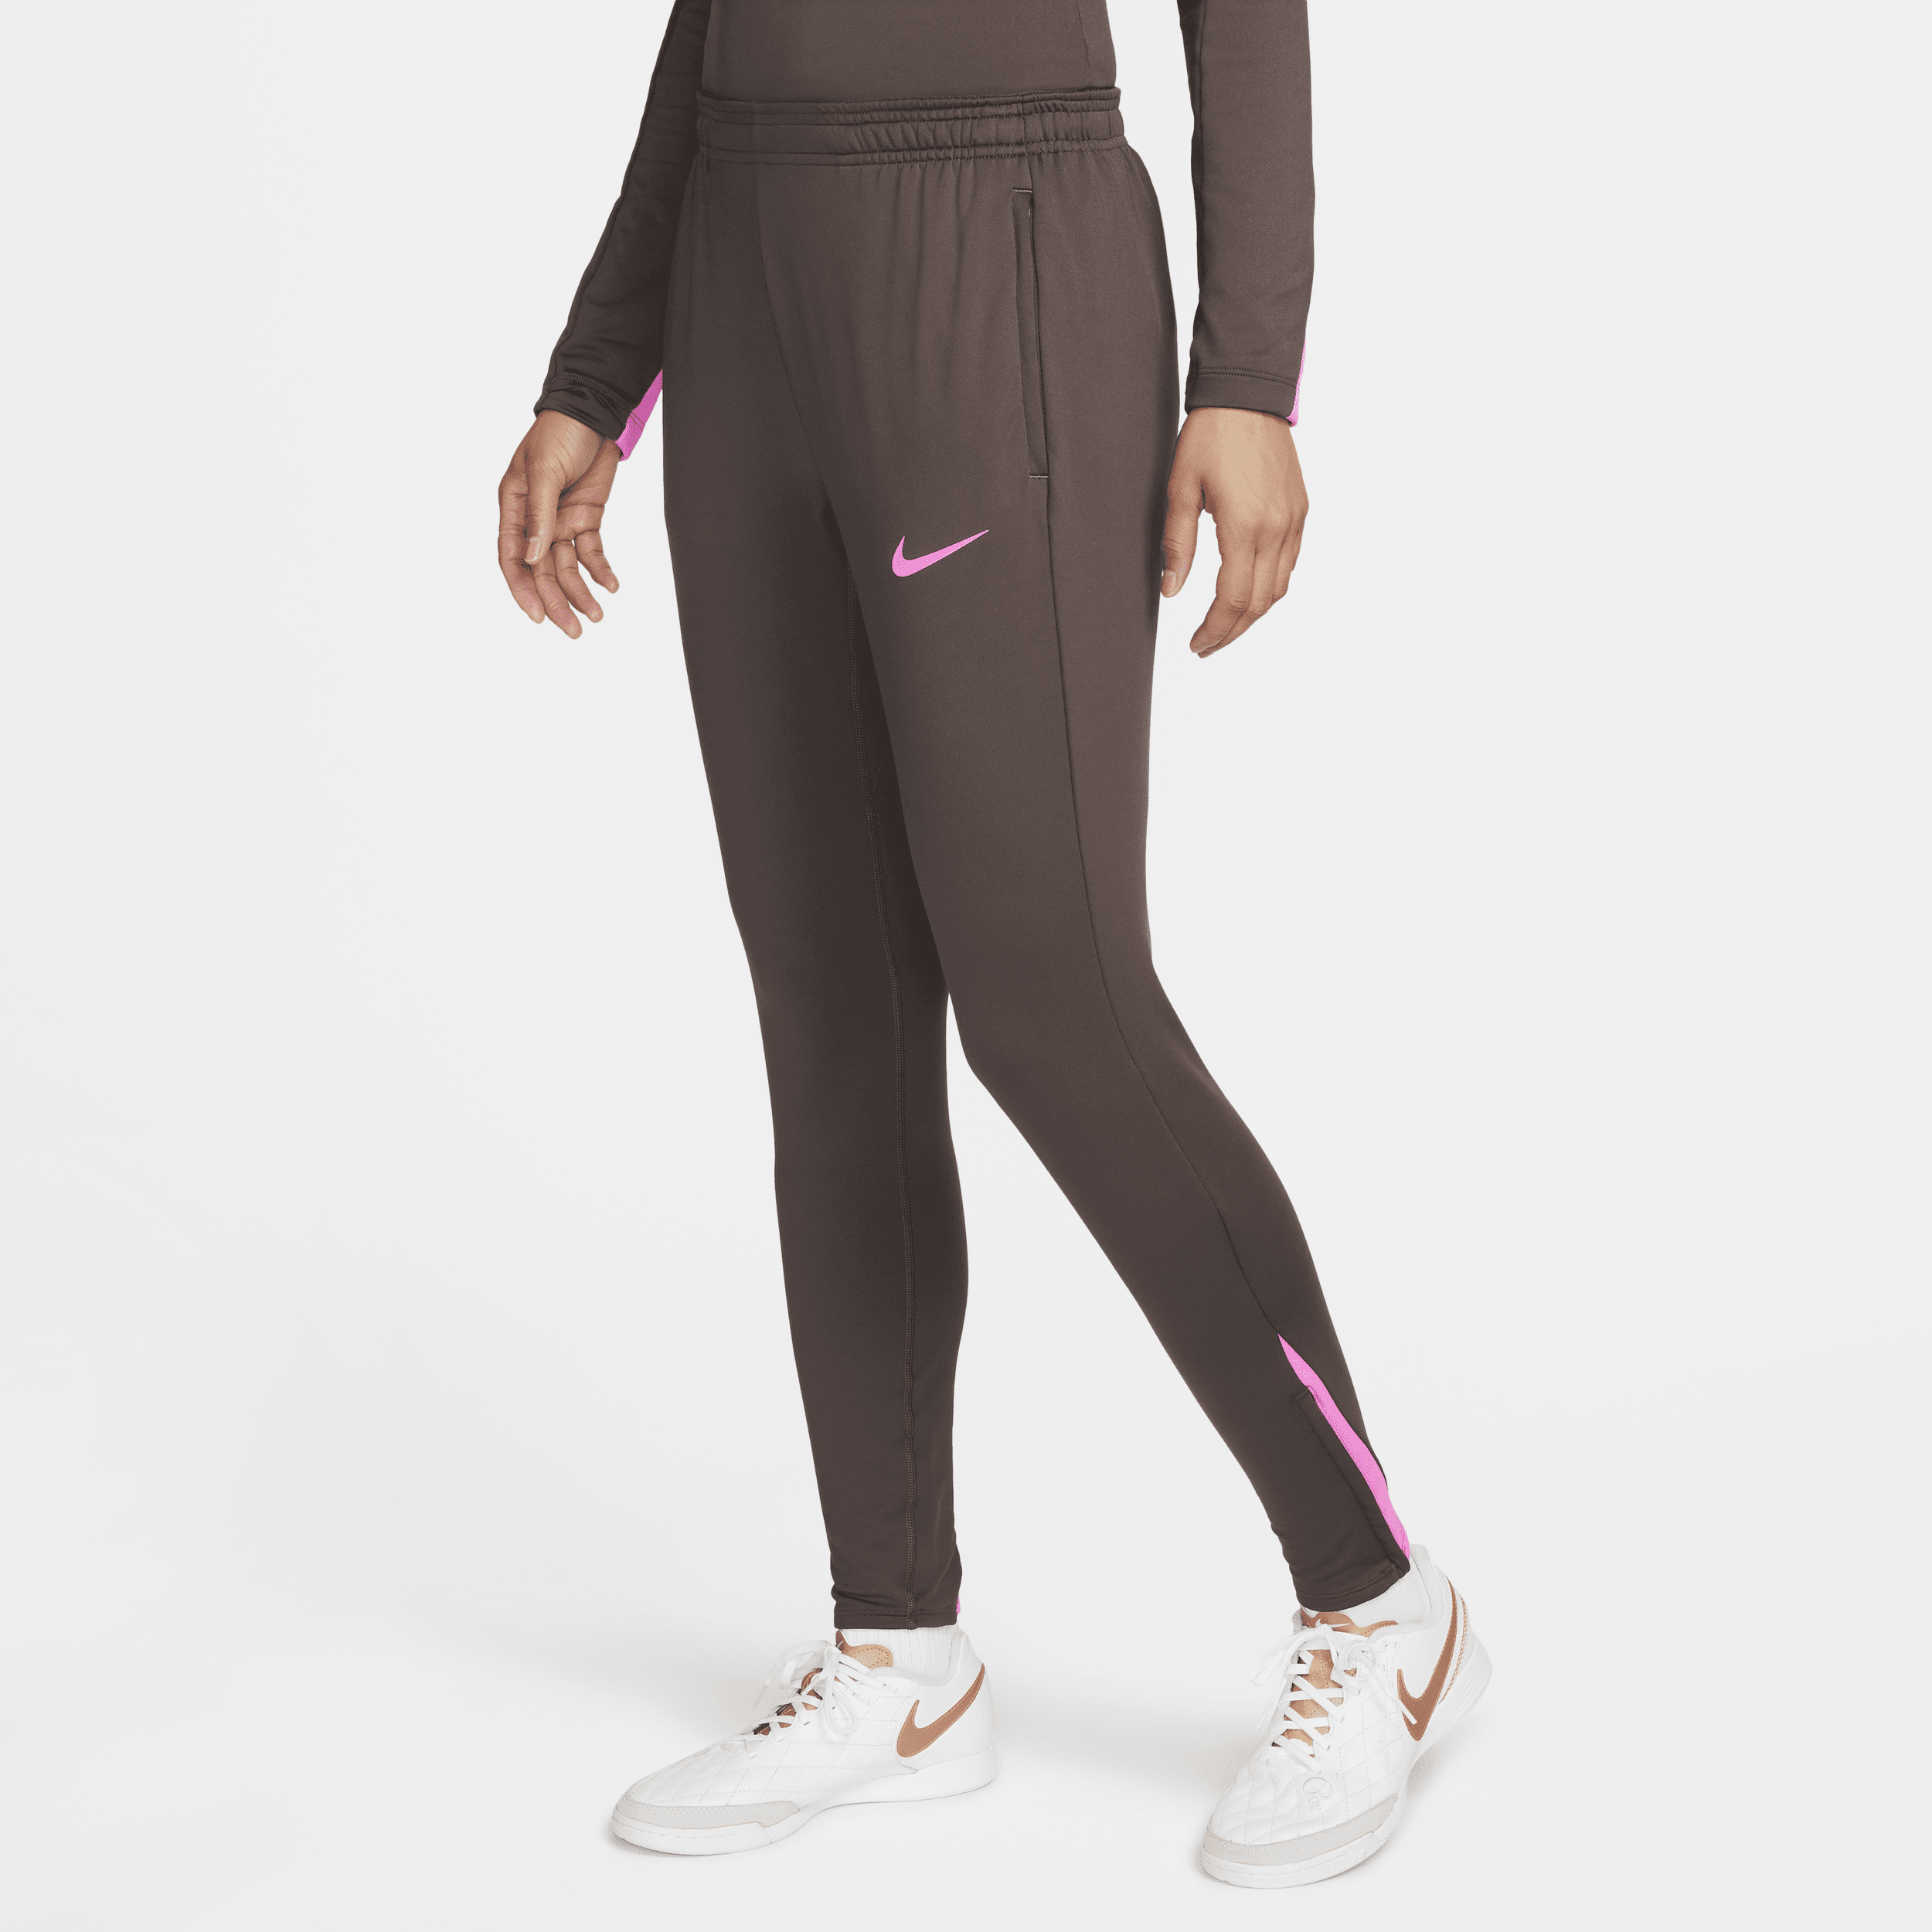 Nike Women's Strike Dri-fit Soccer Pants In Brown